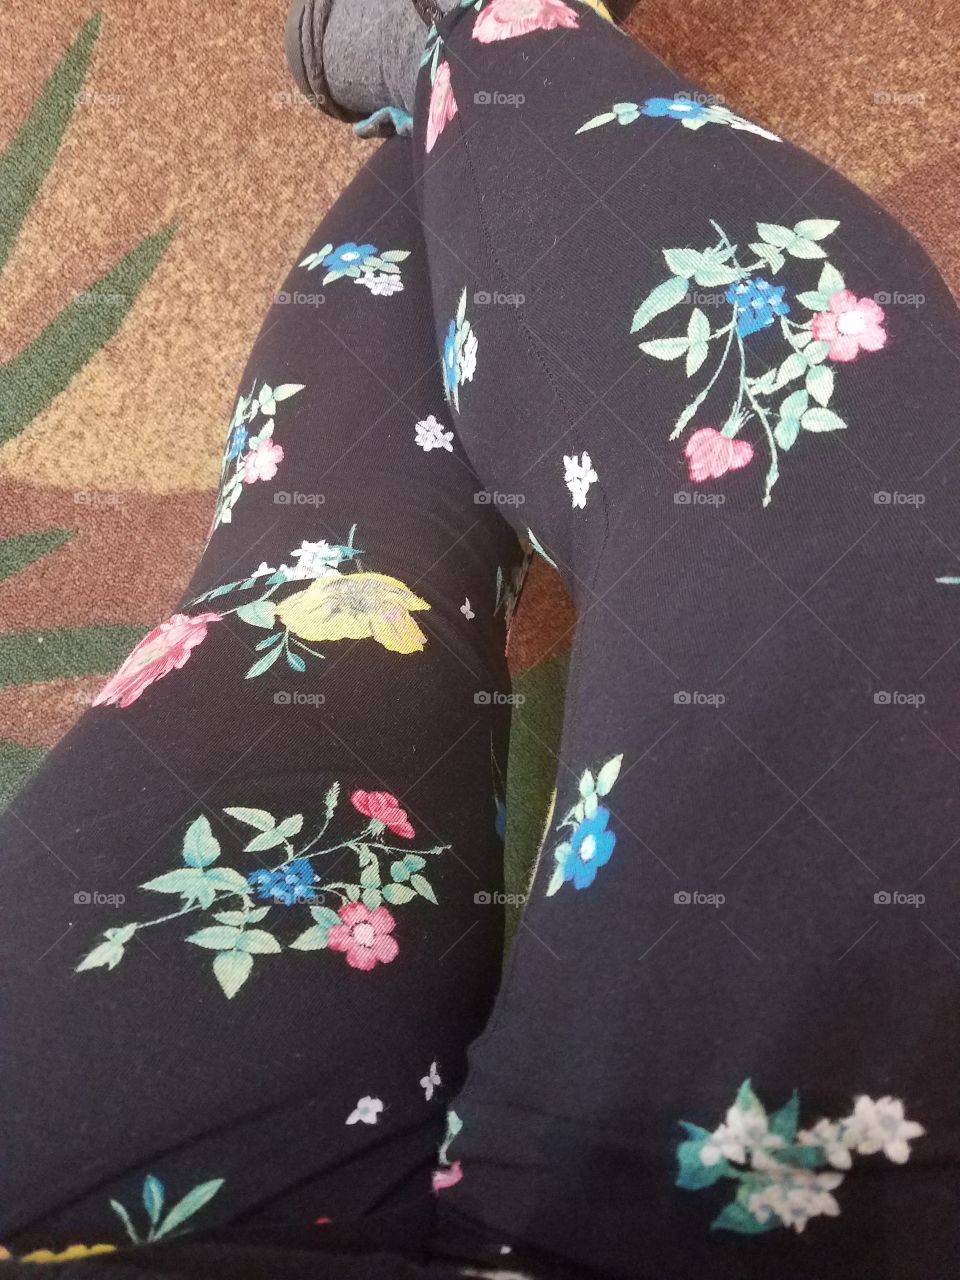 floral leggings